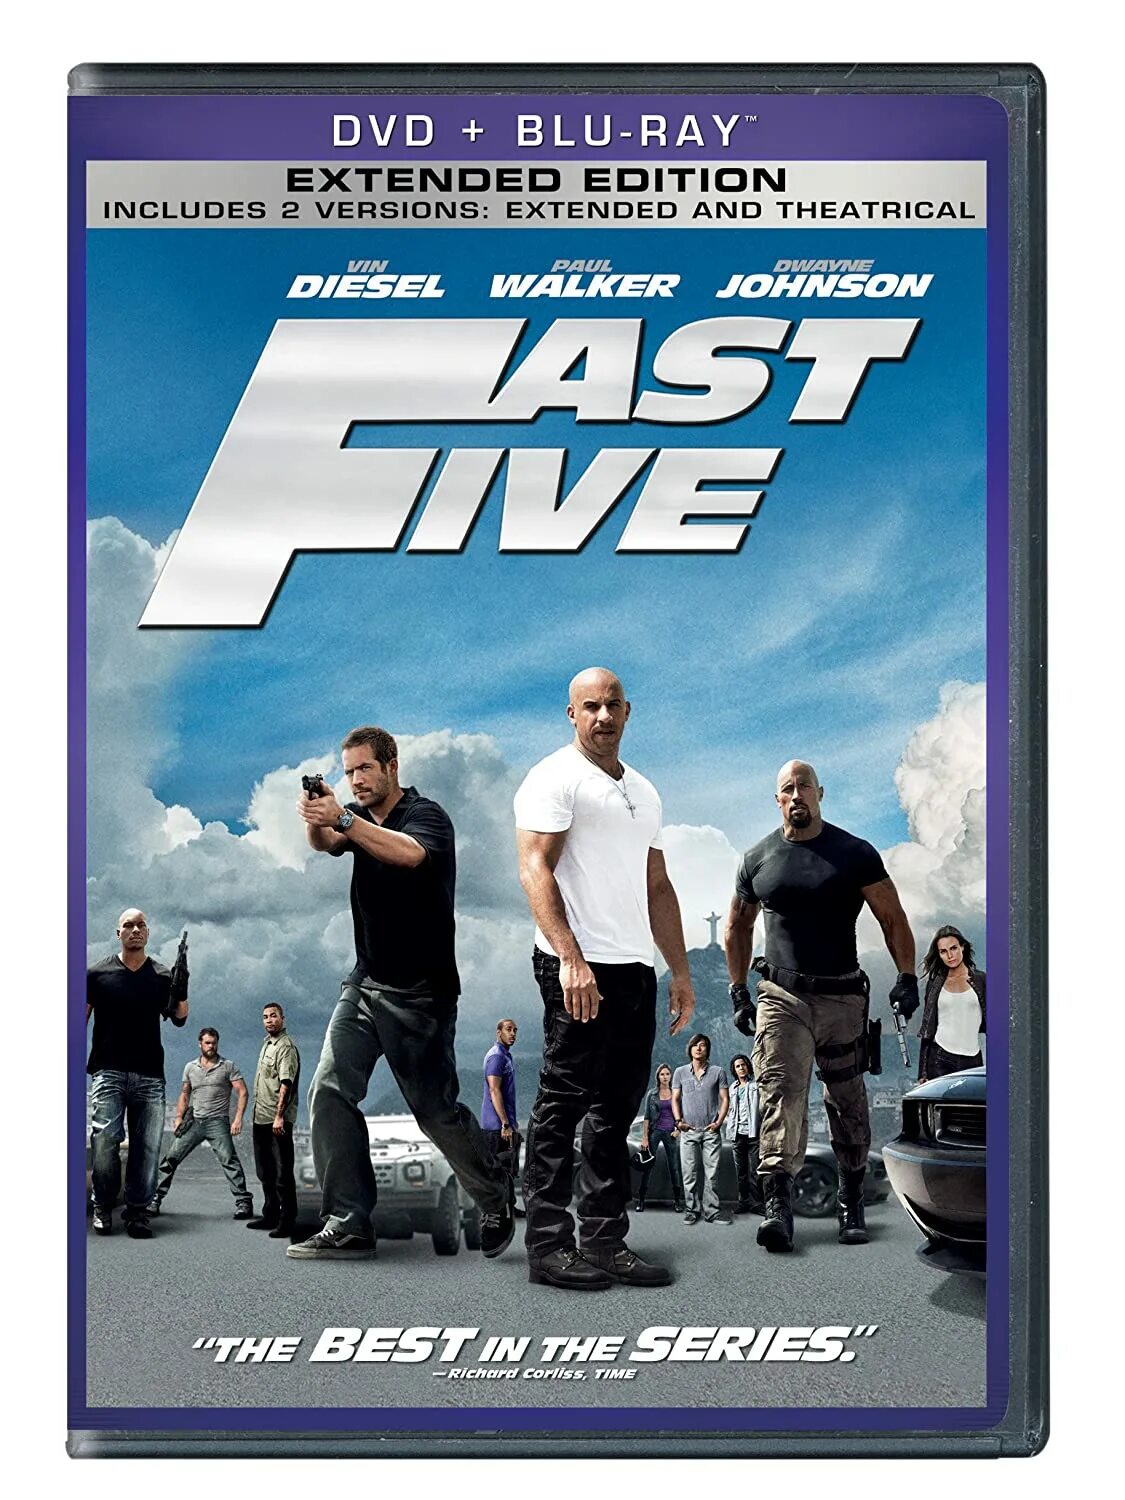 Форсаж 5 Blu ray 4k. Форсаж 5 2011 Постер 4к. Форсаж 5 (DVD). Fast back